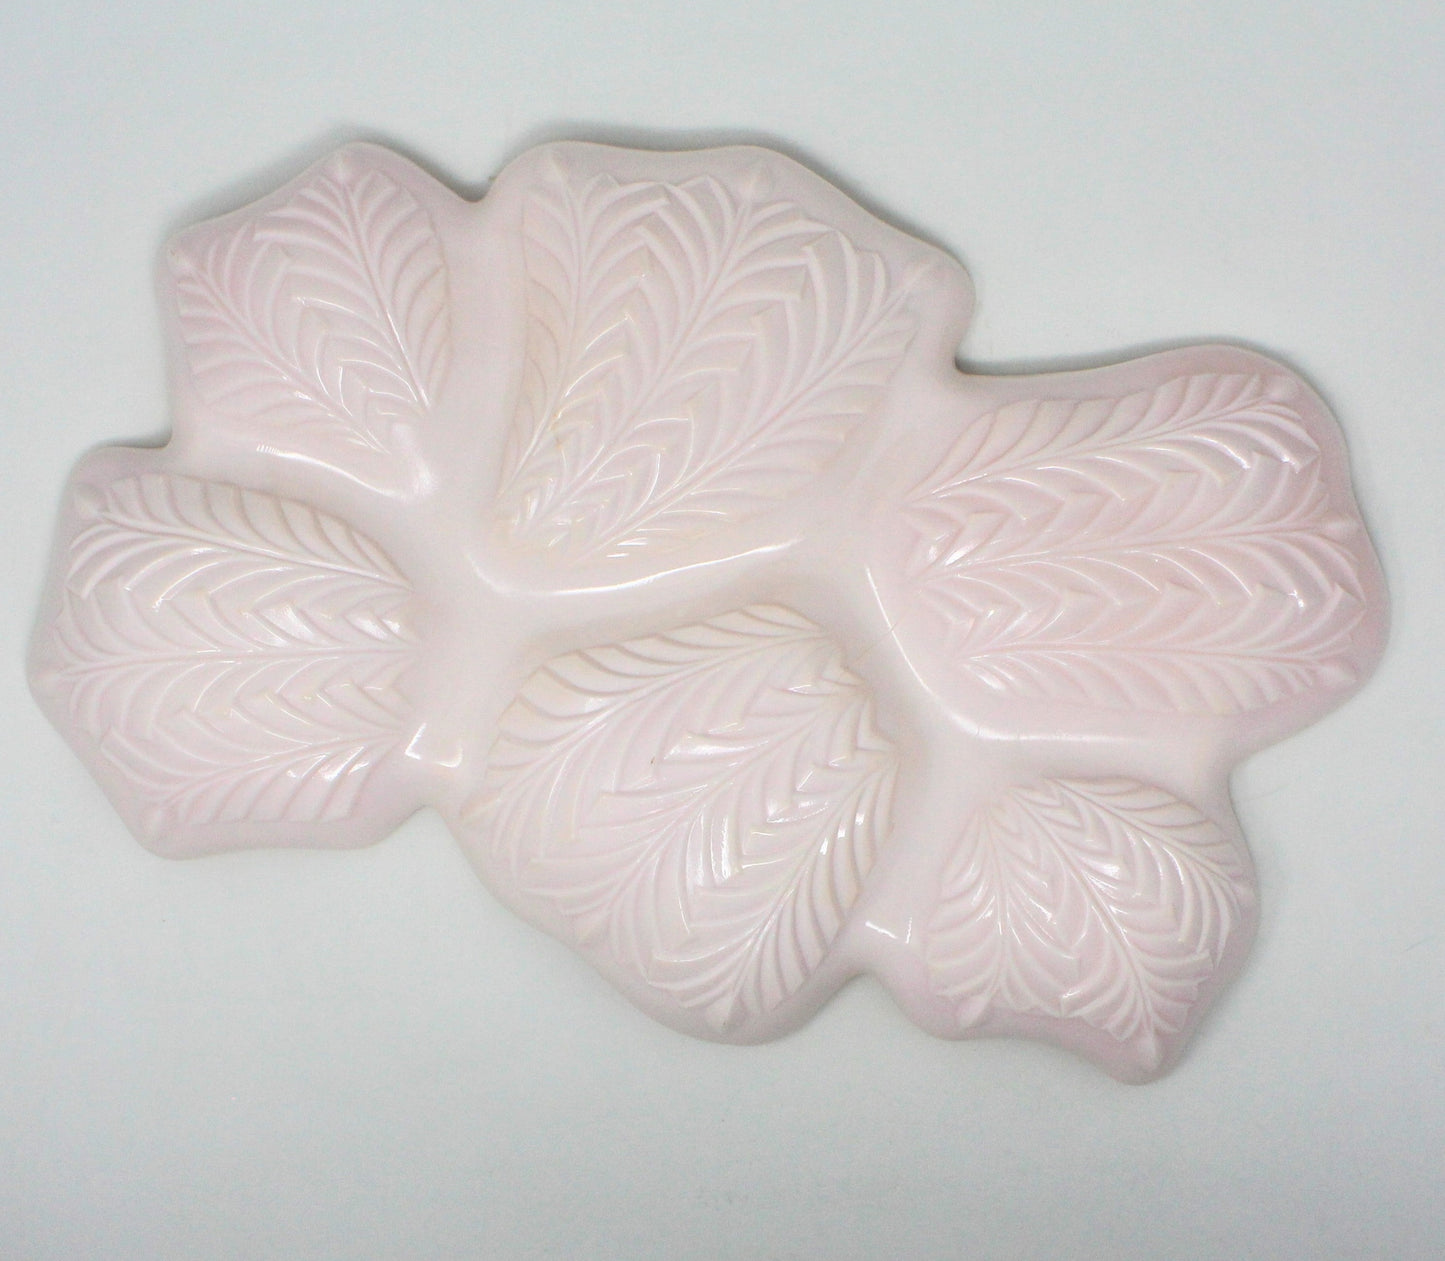 Divided Serving Platter, Jeannette Glass, Pink Milk Glass Feather Pattern, Vintage